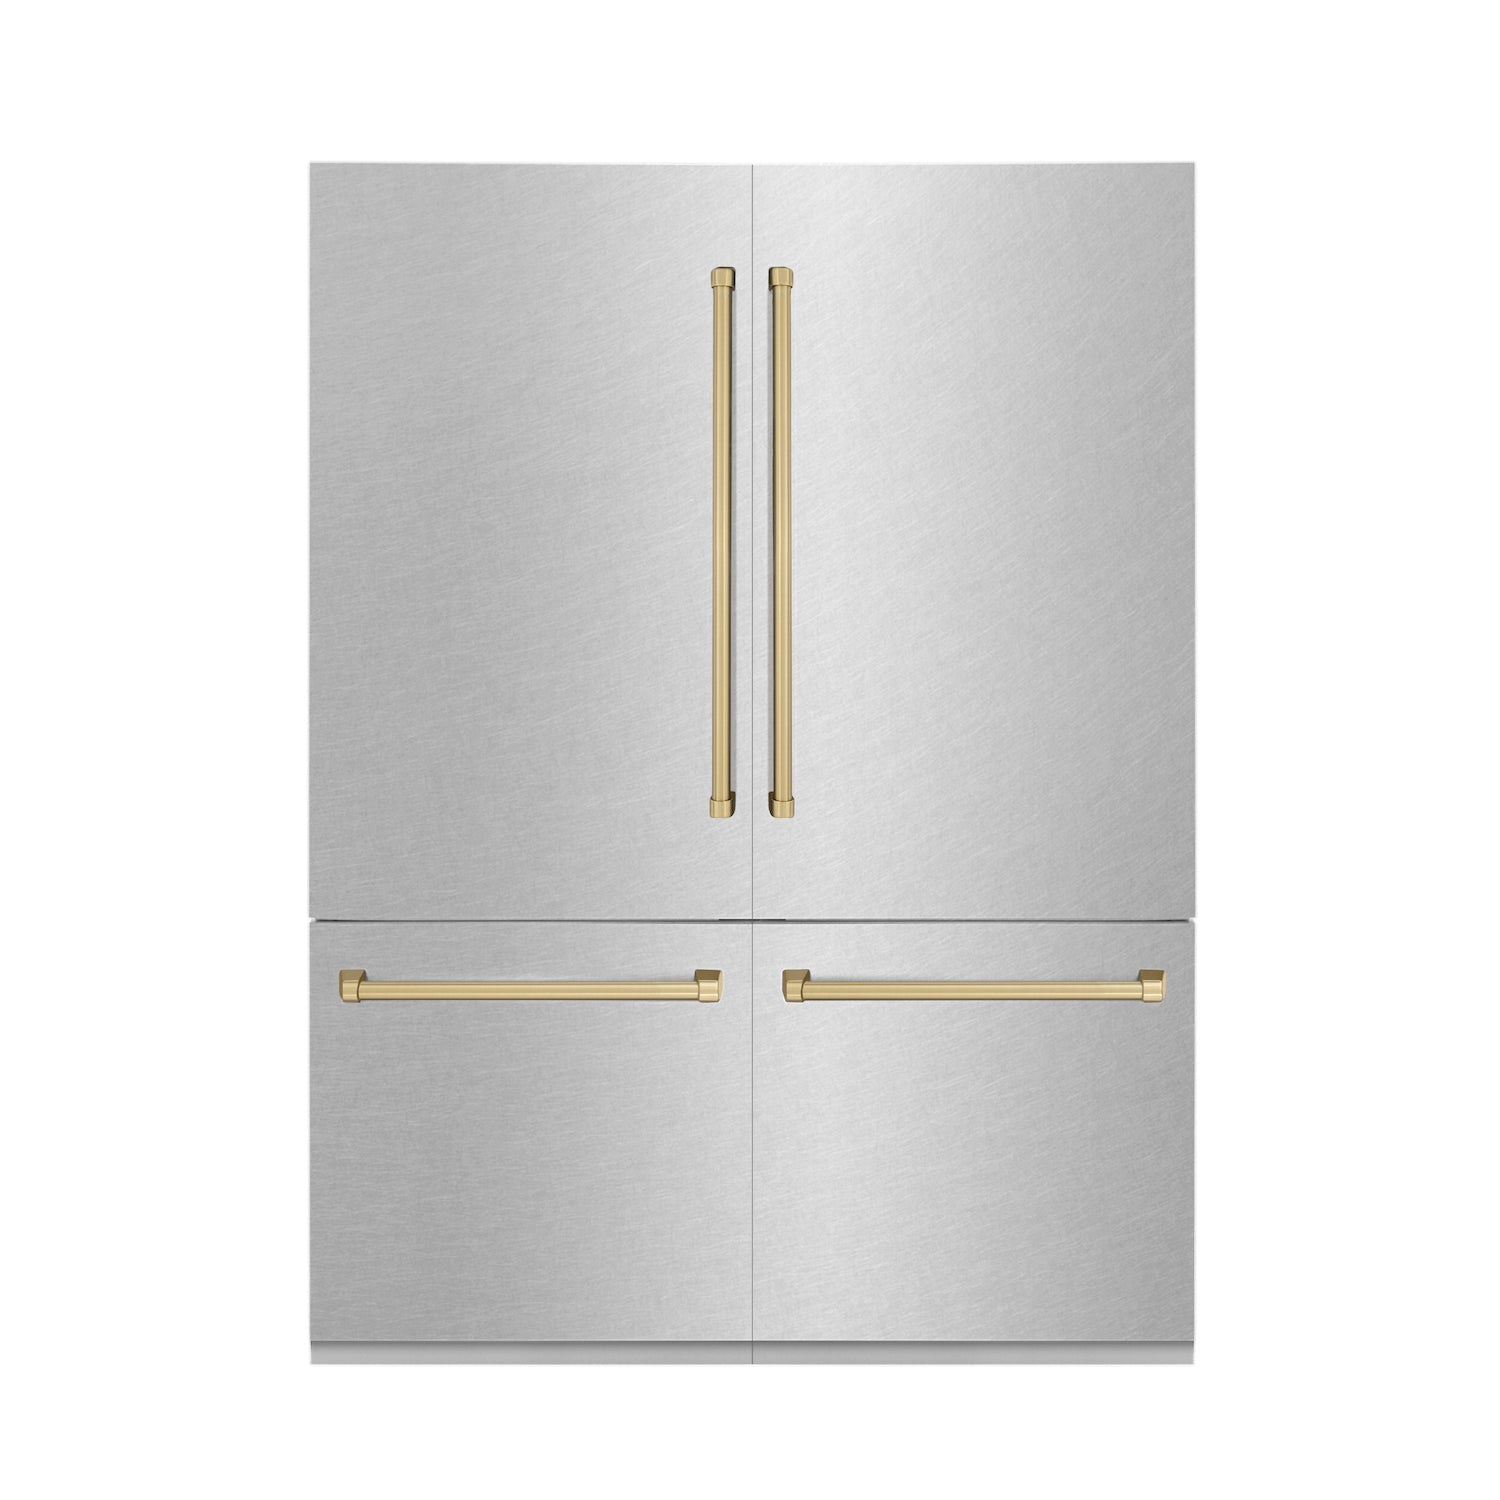 ZLINE 60" Autograph Edition Built-in 4-Door French Door Refrigerator - Fingerprint Resistant Stainless Steel with Accents, Internal Water and Ice Dispenser